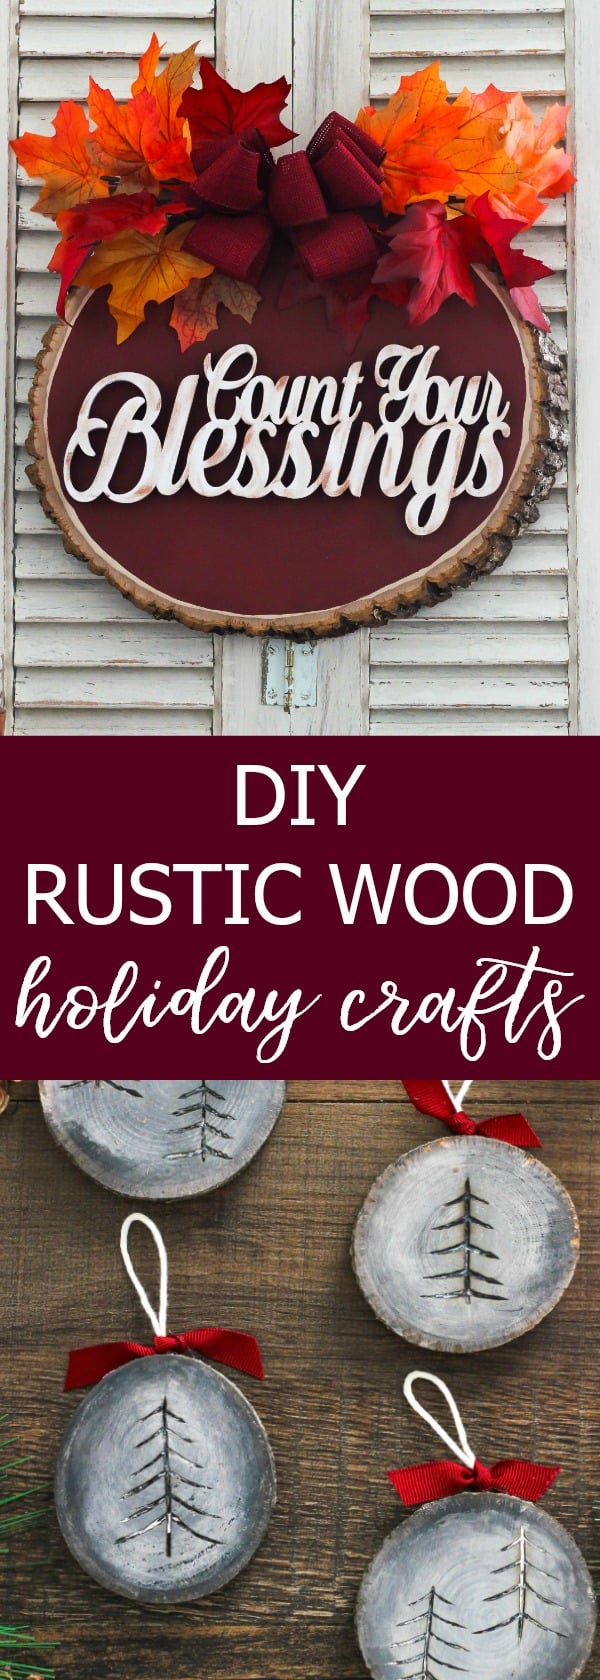 DIY Rustic Wood Holiday Crafts